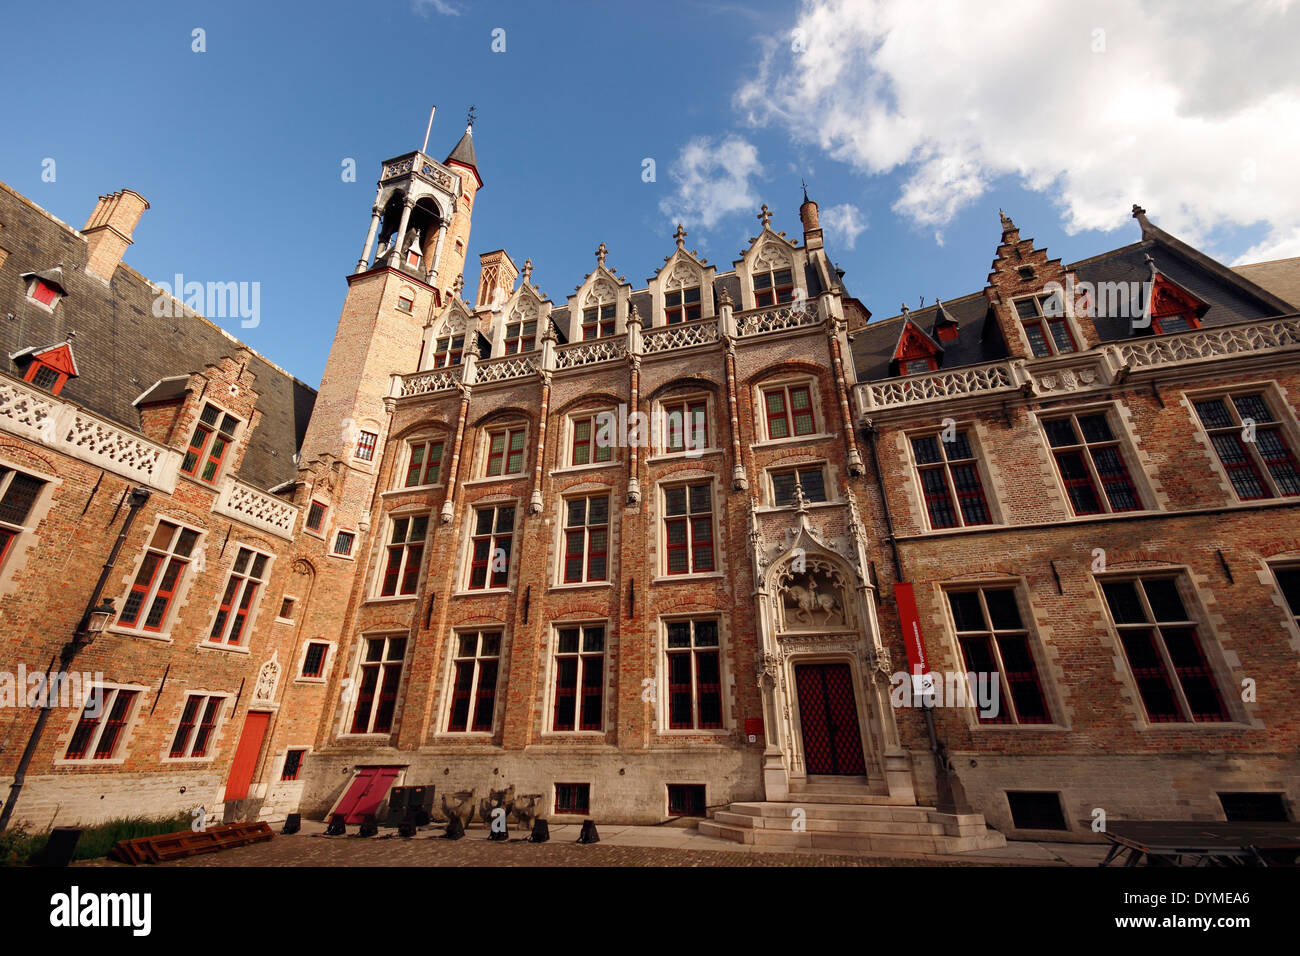 The Gruuthusemuseum and courtyard, Bruges, Belgium Stock Photo